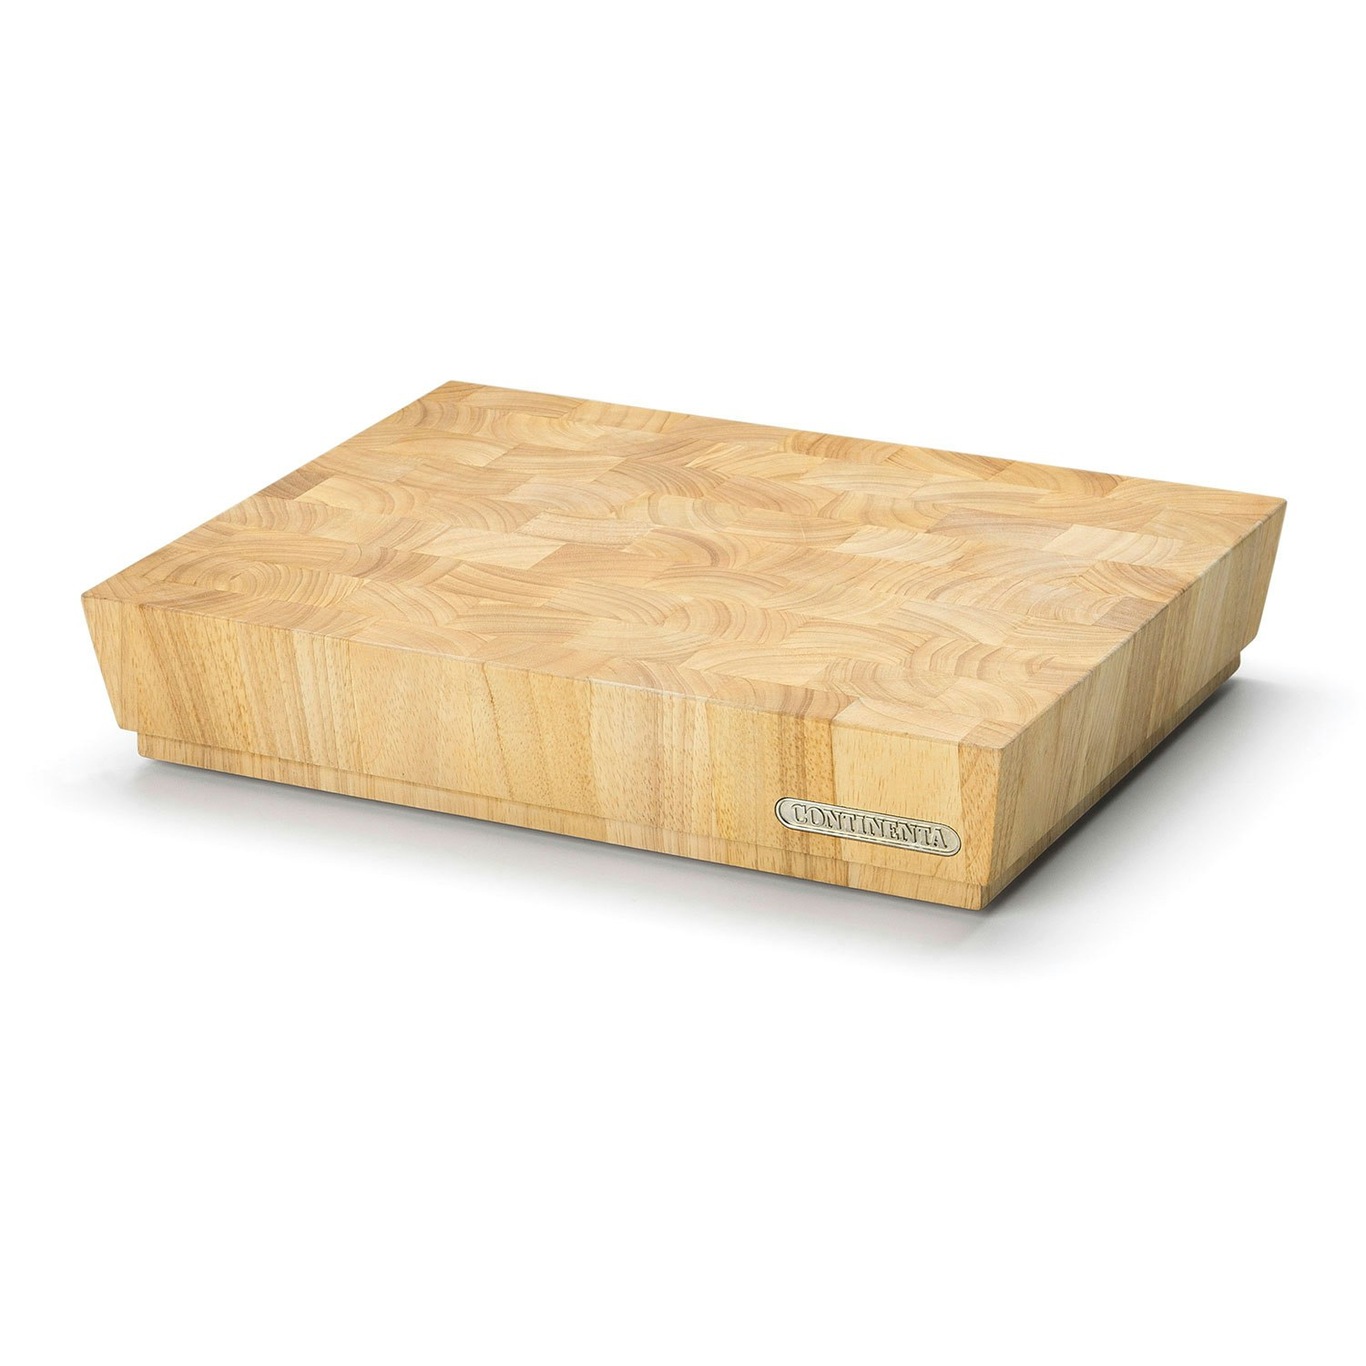 https://royaldesign.com/image/2/continenta-cutting-board-rubber-wood-40-x-30-x-73-cm-1?w=800&quality=80